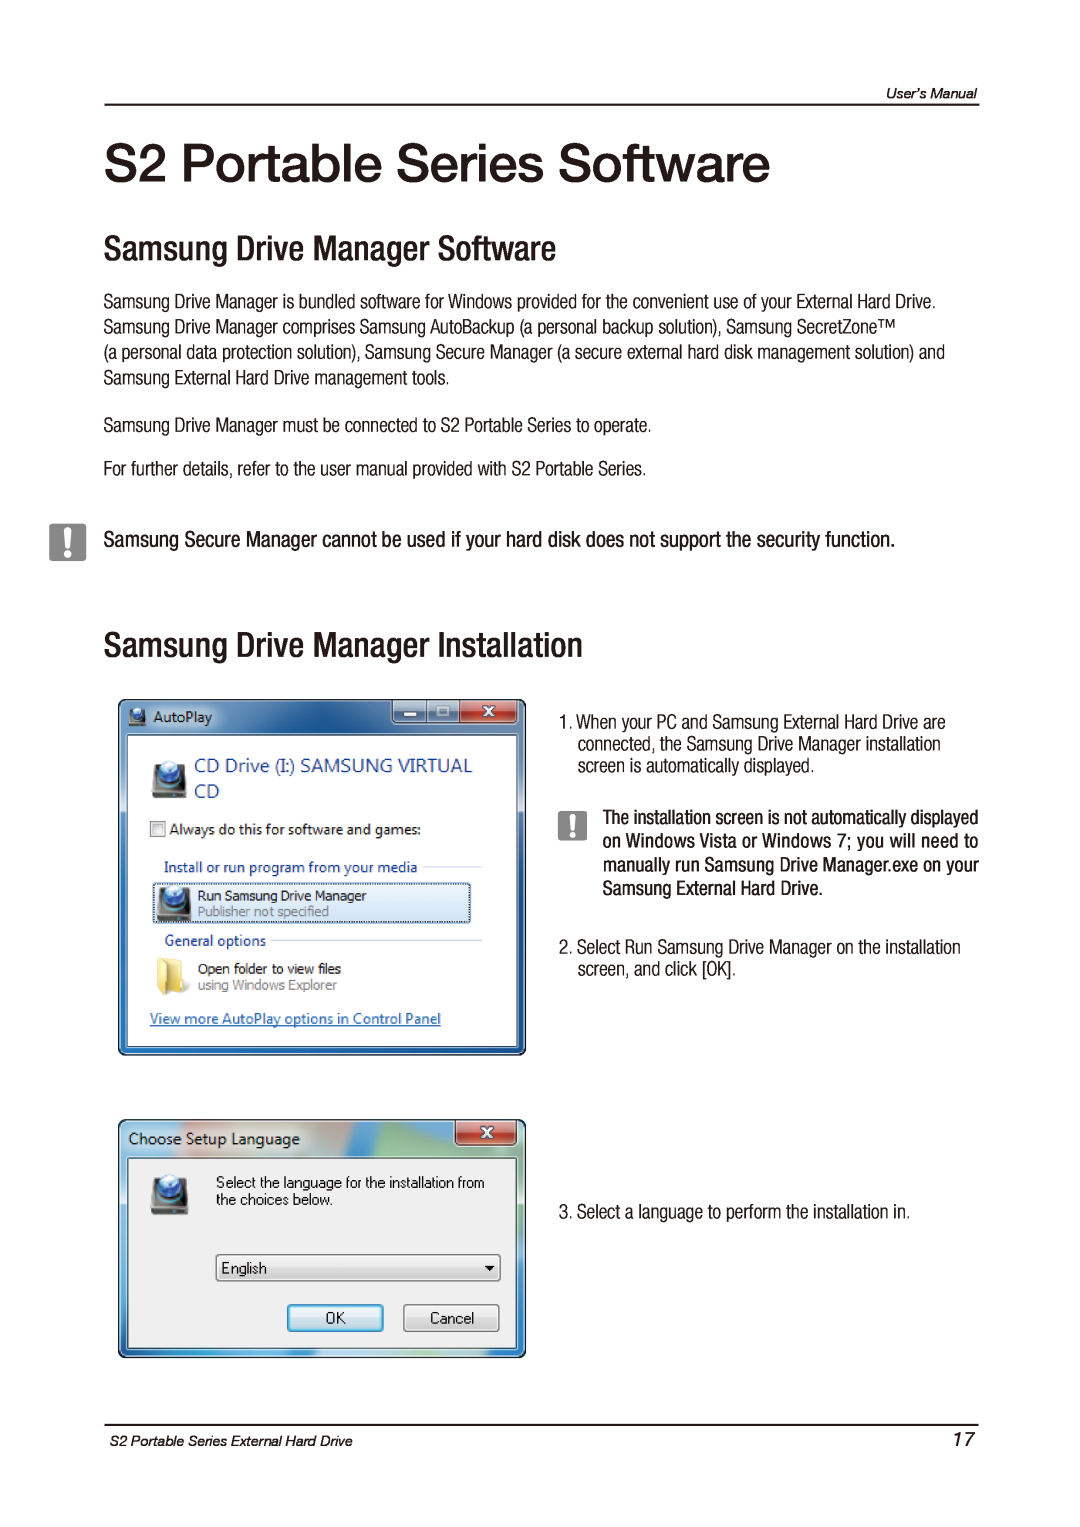 Samsung S2 PORTABLE 3.0 S2 Portable Series Software, Samsung Drive Manager Software, Samsung Drive Manager Installation 